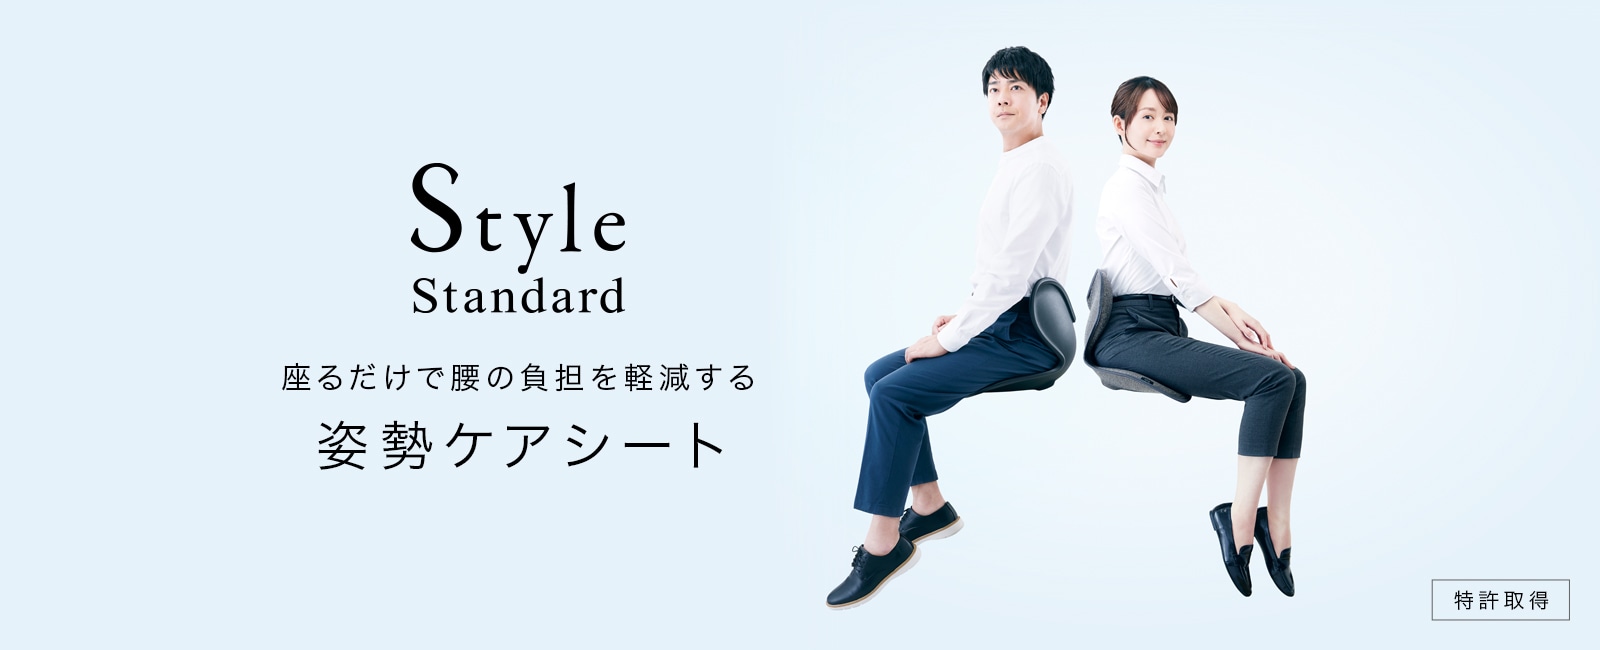 Style standard